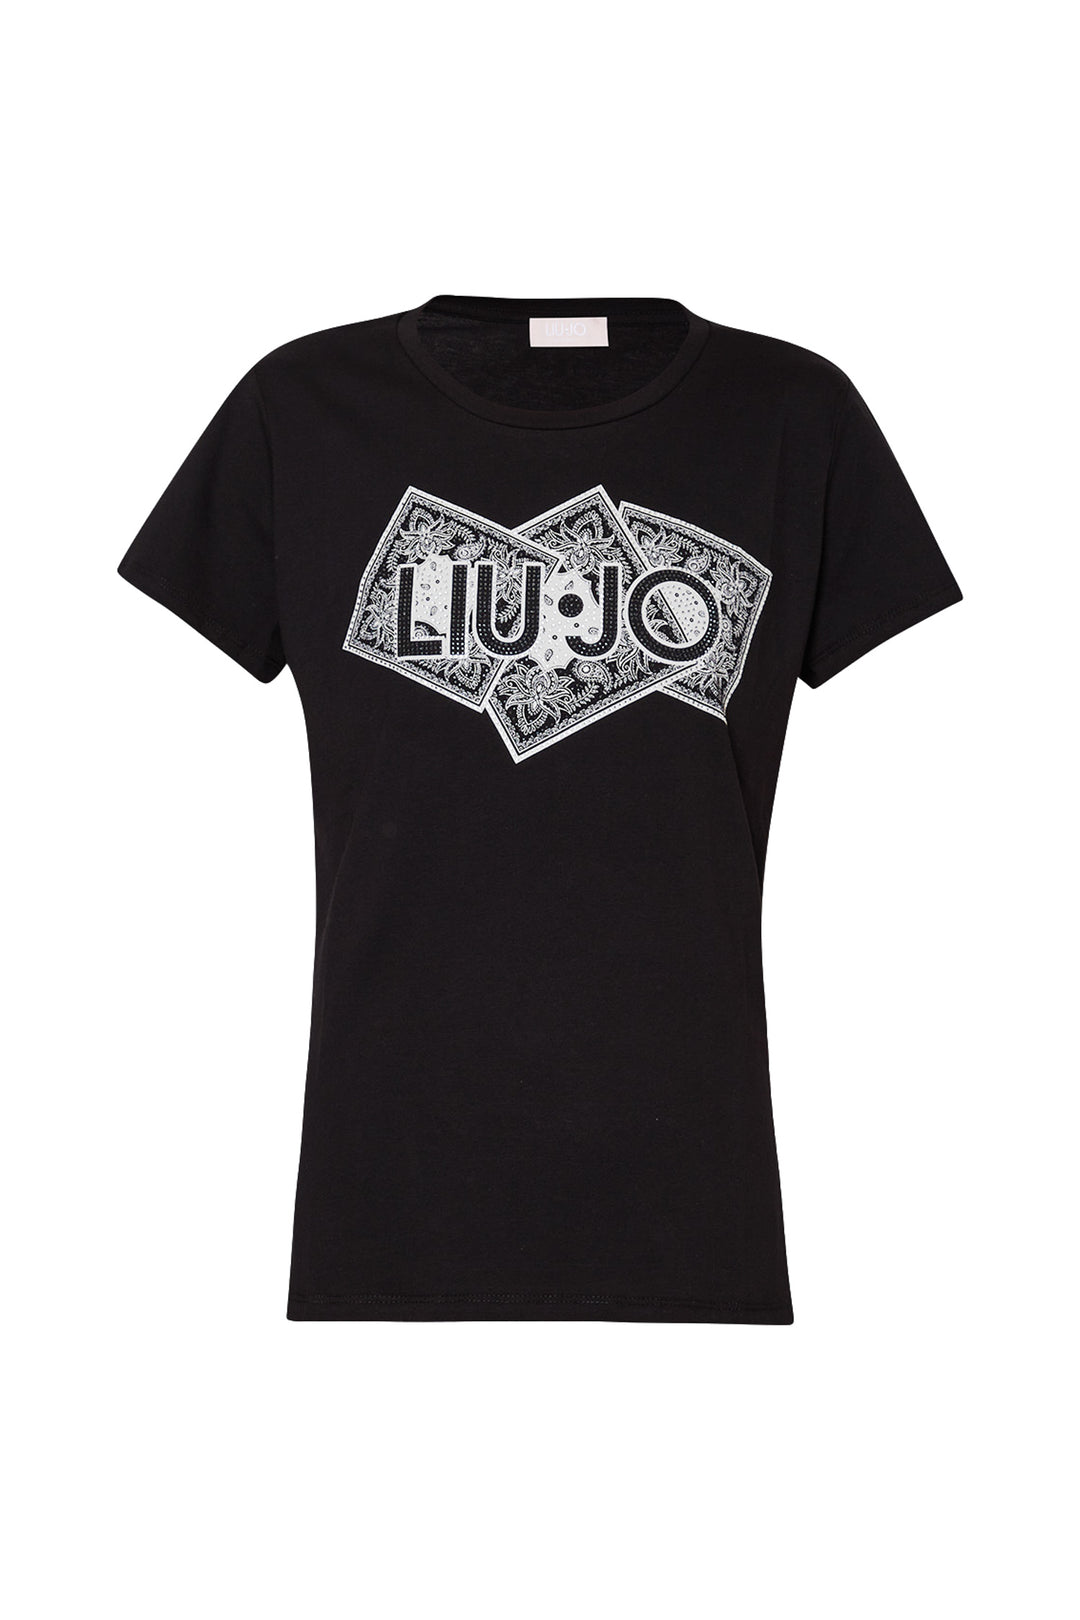 LIU JO T-shirt nera in cotone con stampa LIU JO e applicazioni - Mancinelli 1954